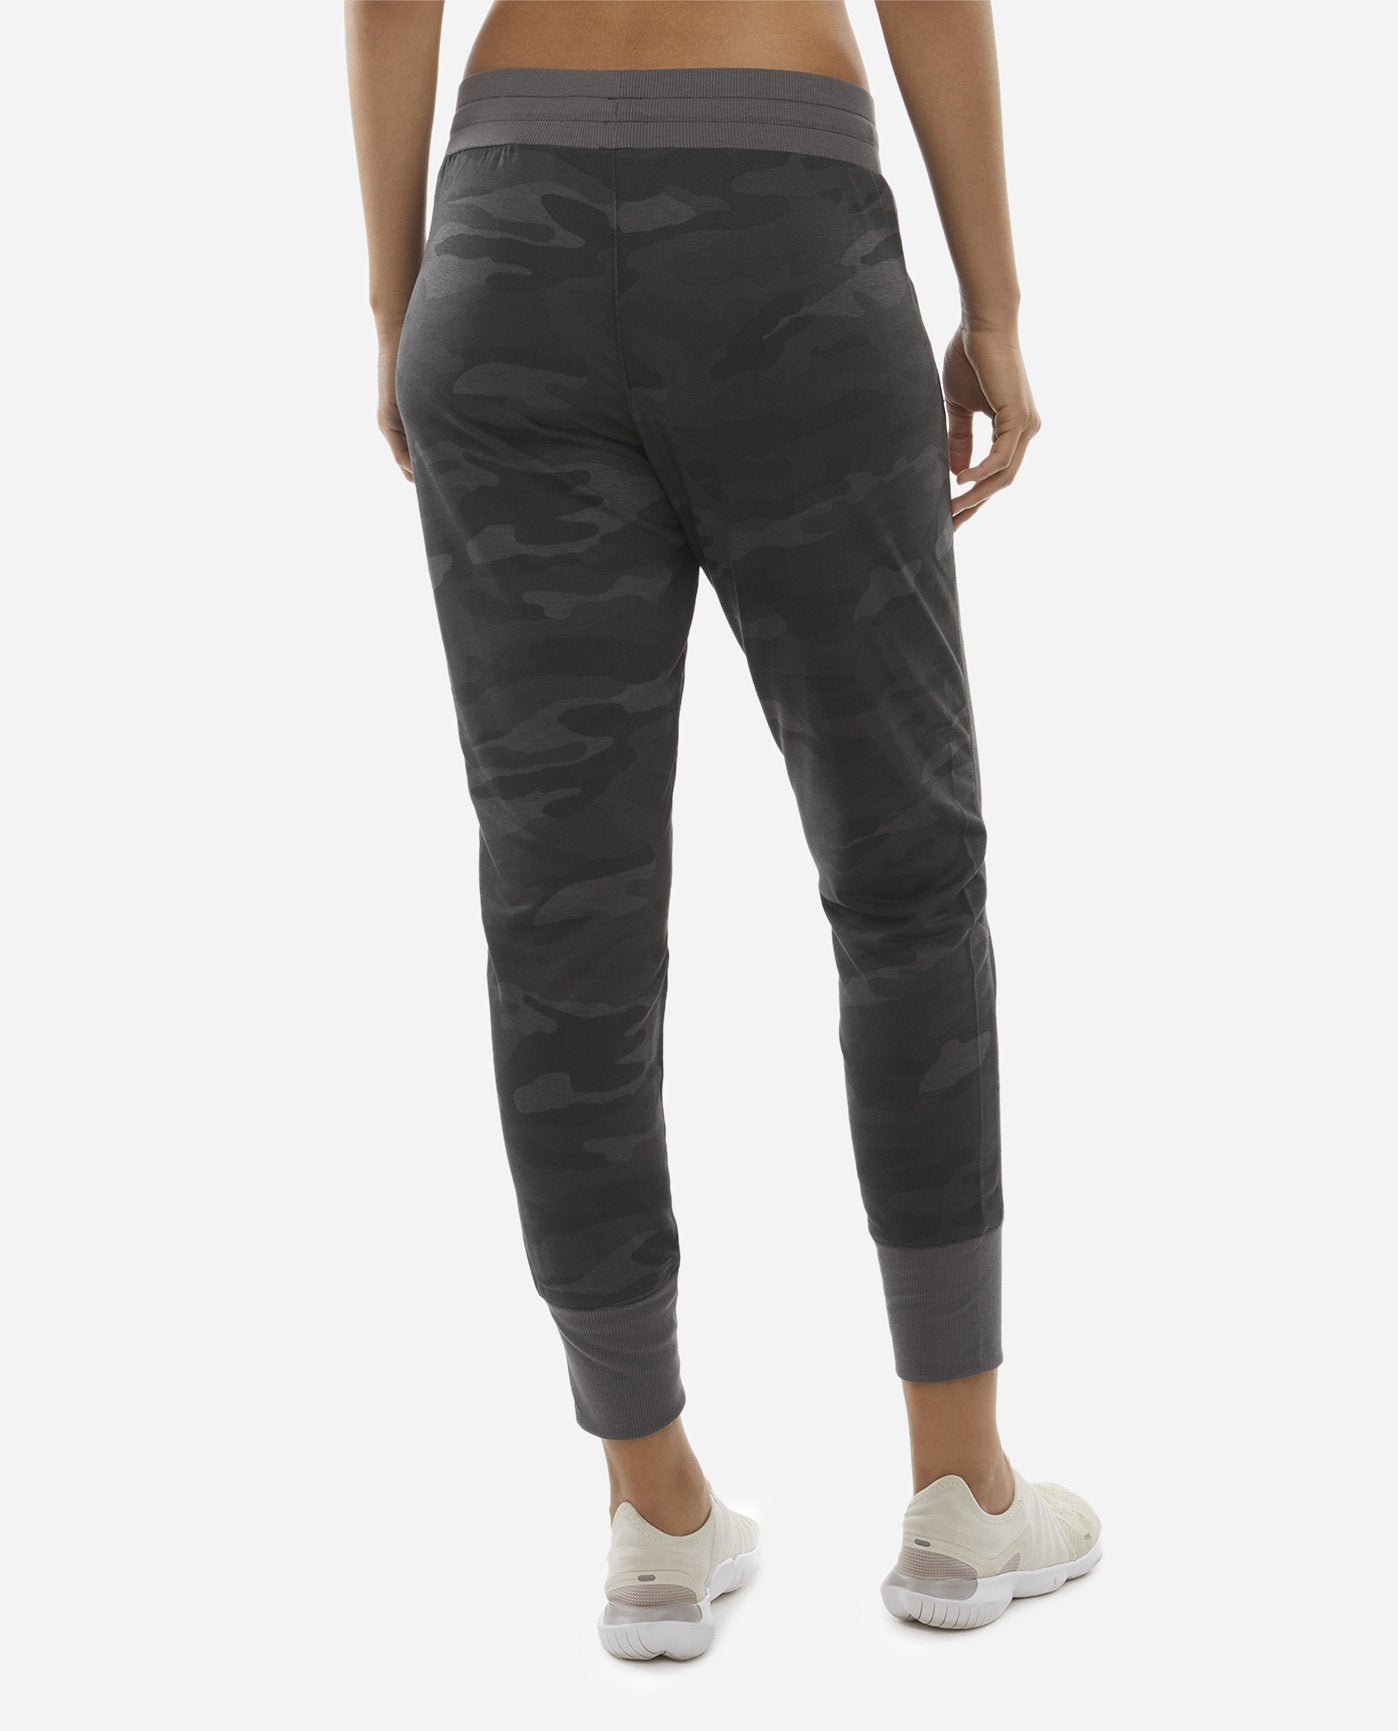 Danskin  Pants  Jumpsuits  Danskin Casual Yoga Pants With Pockets S2 Or  S Xxl  Poshmark